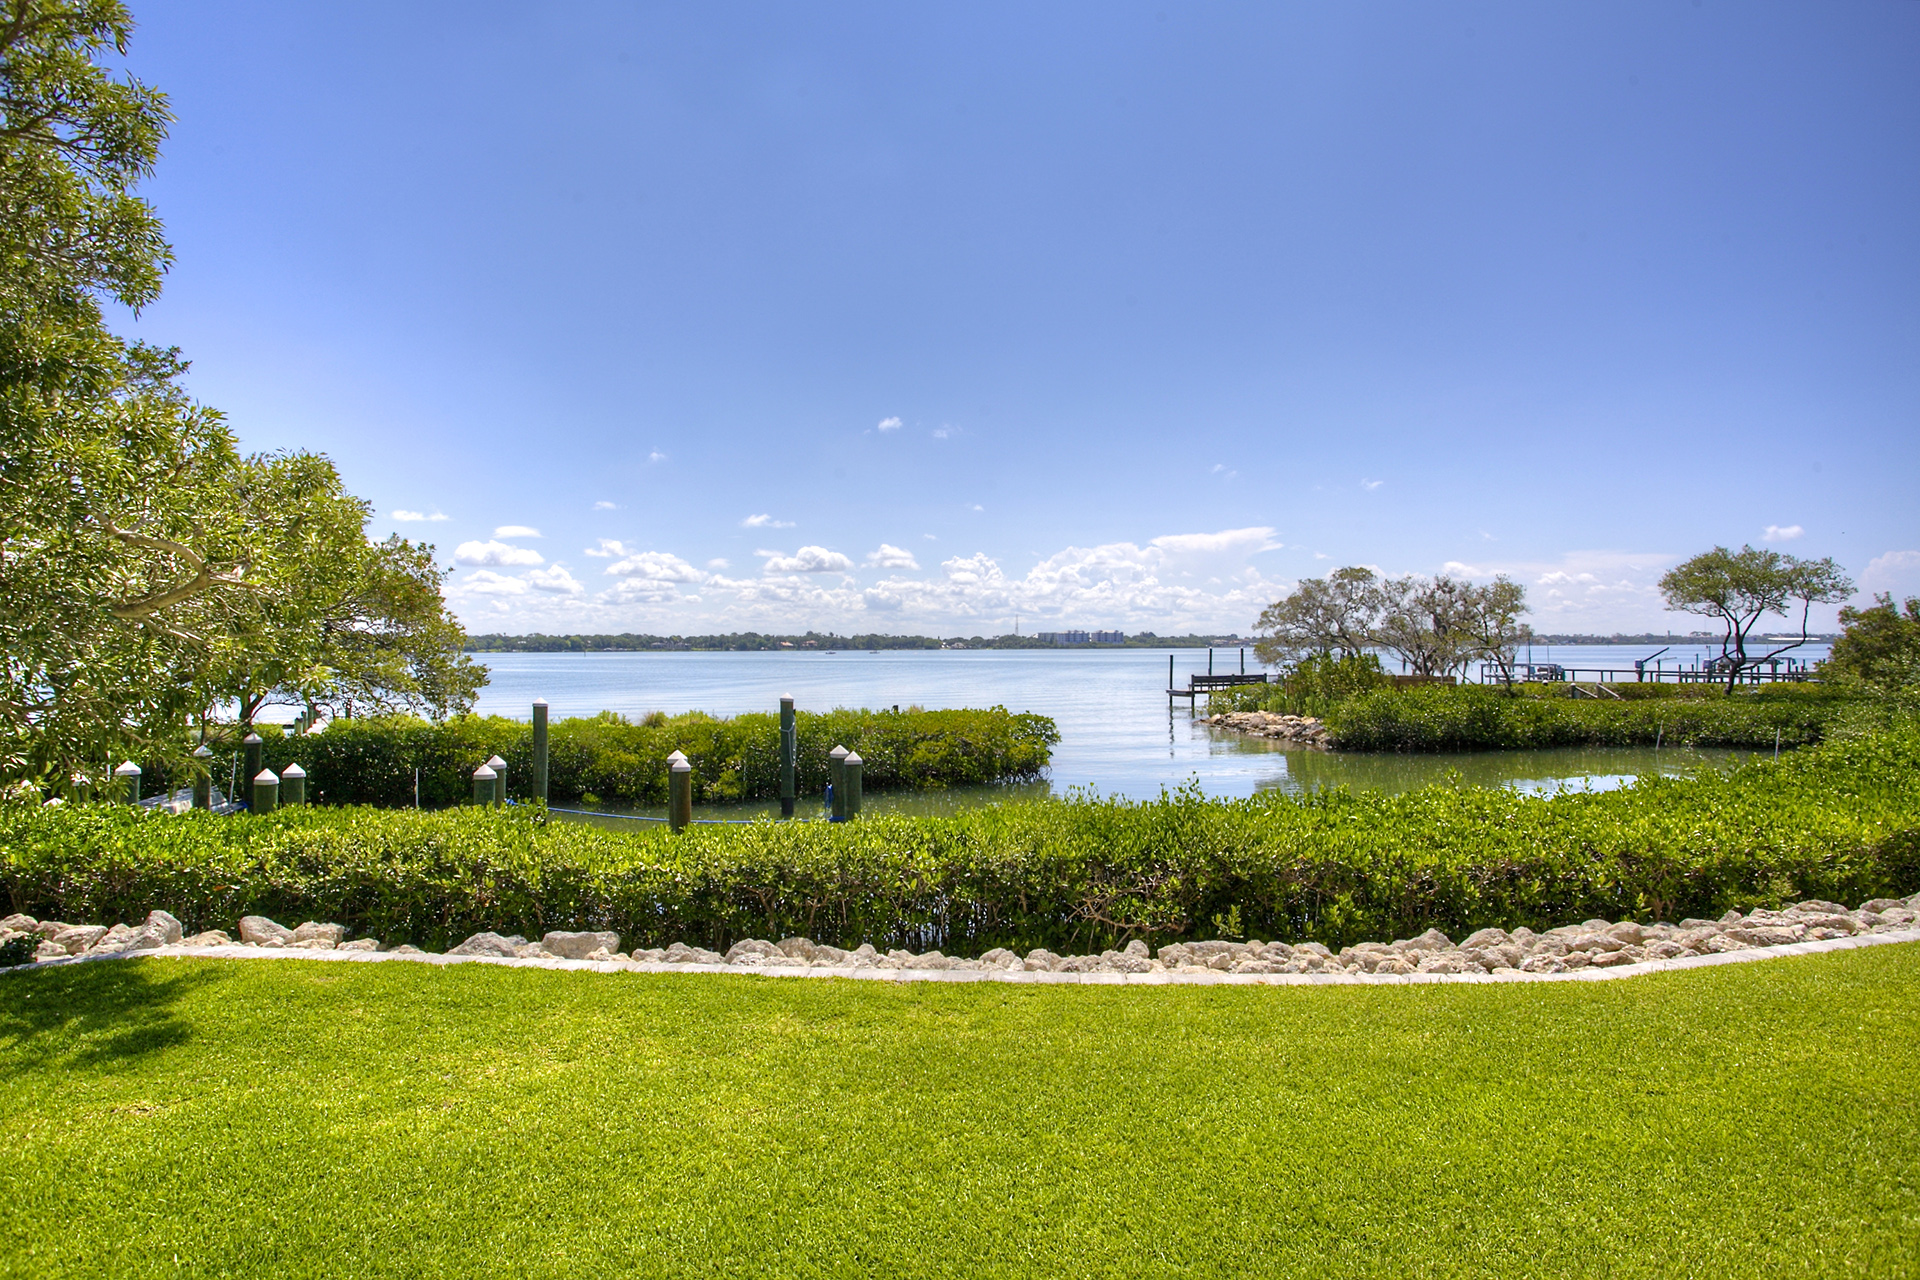 Landscape Company Sarasota Florida